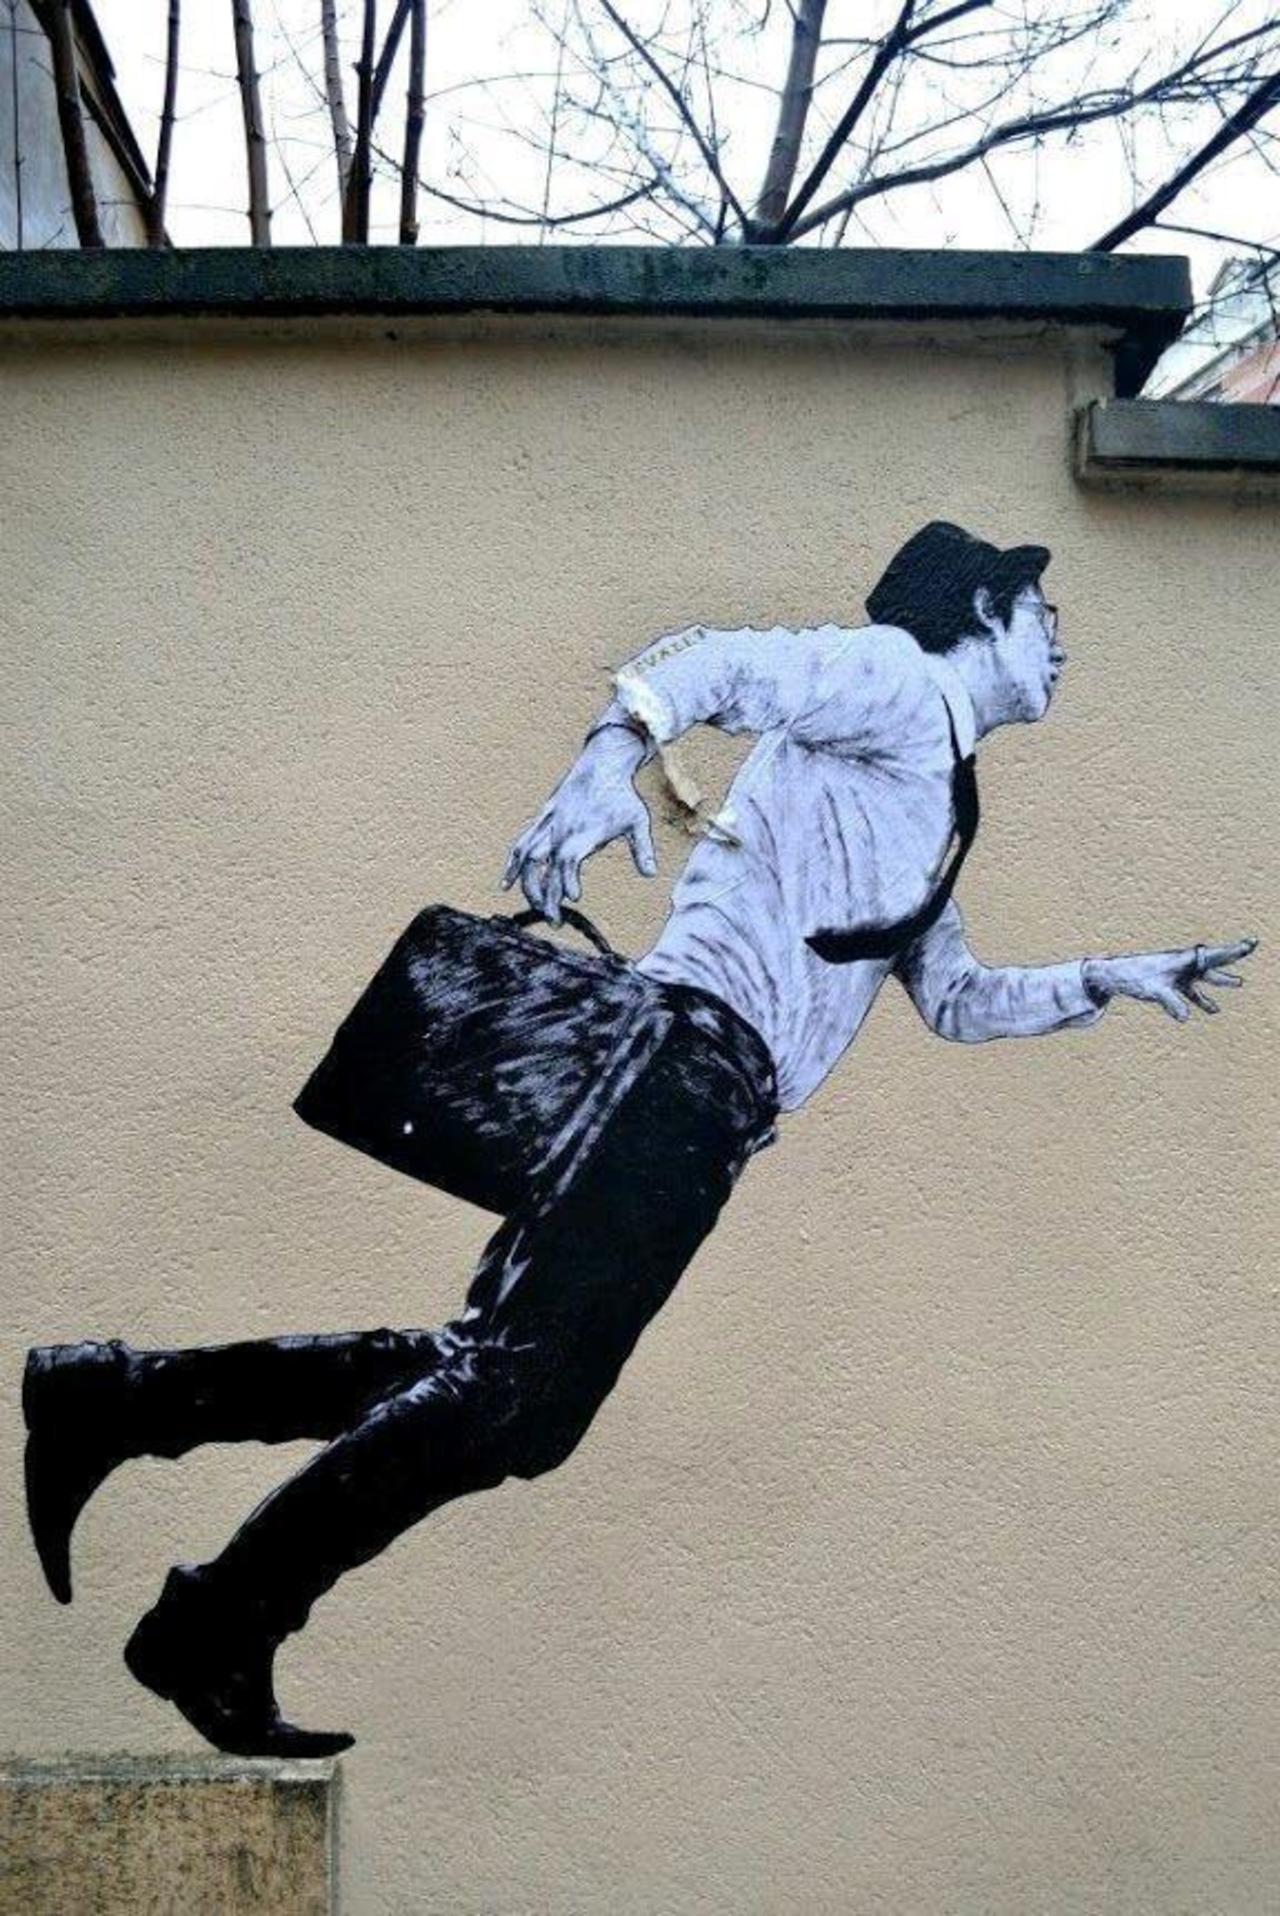 RT @AuKeats: Mind your step #streetart #switch #bedifferent #graffiti #art #art http://t.co/84qjqoA0tk